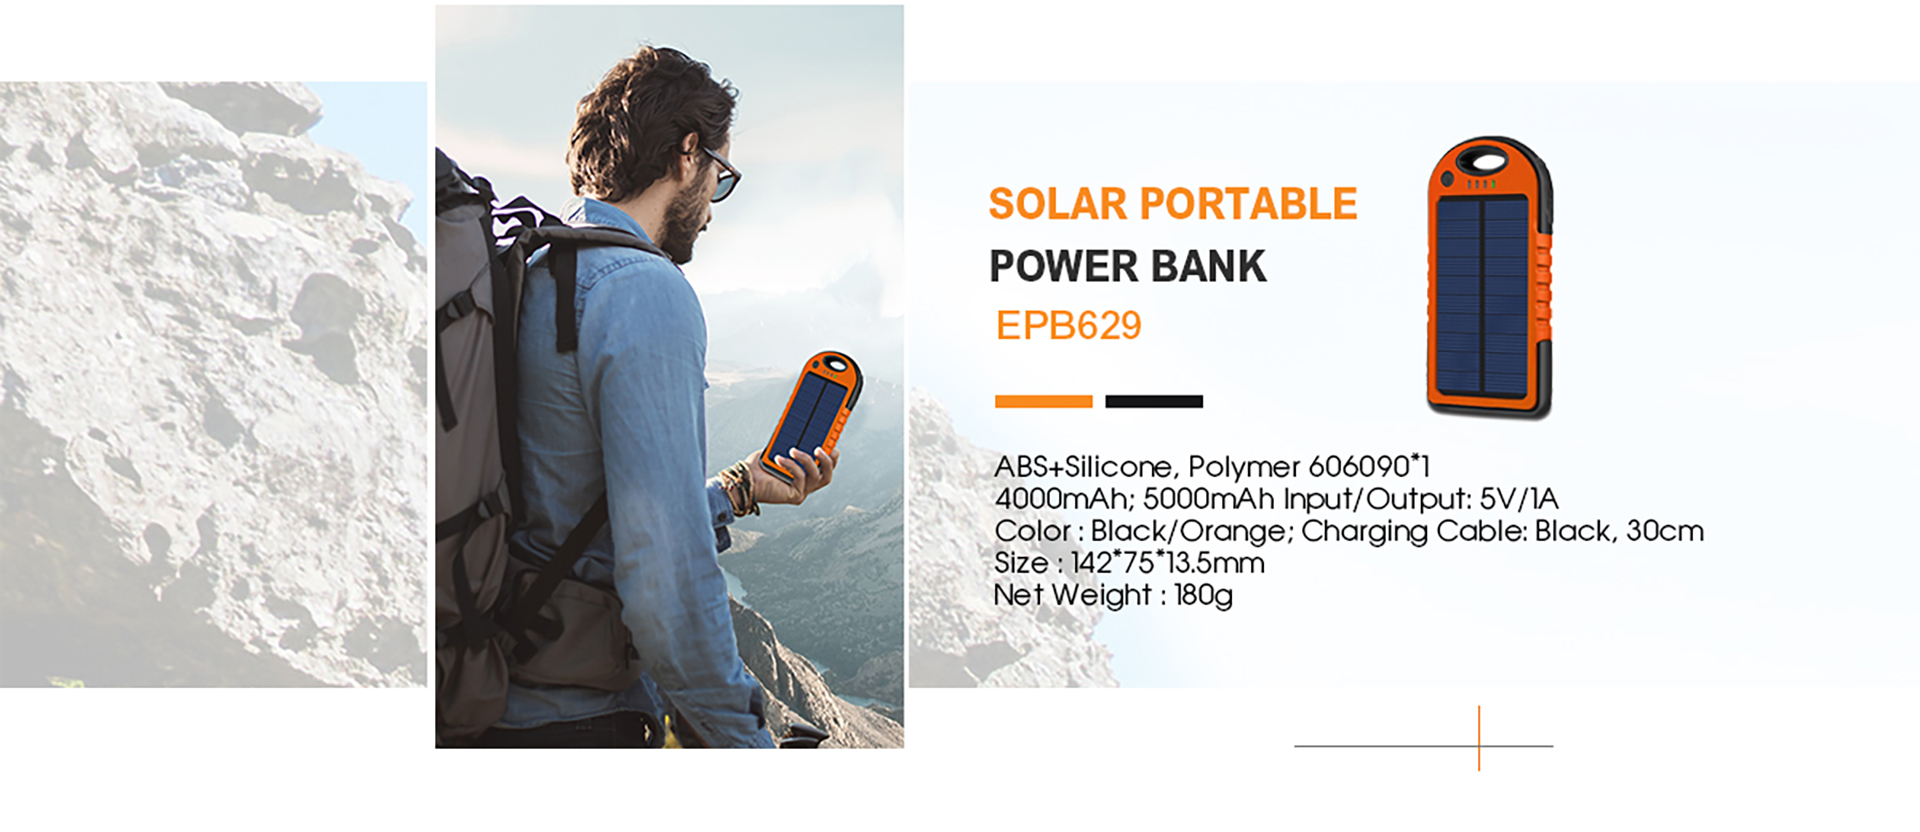 Solar portable power bank EPB629.Silicone solary power